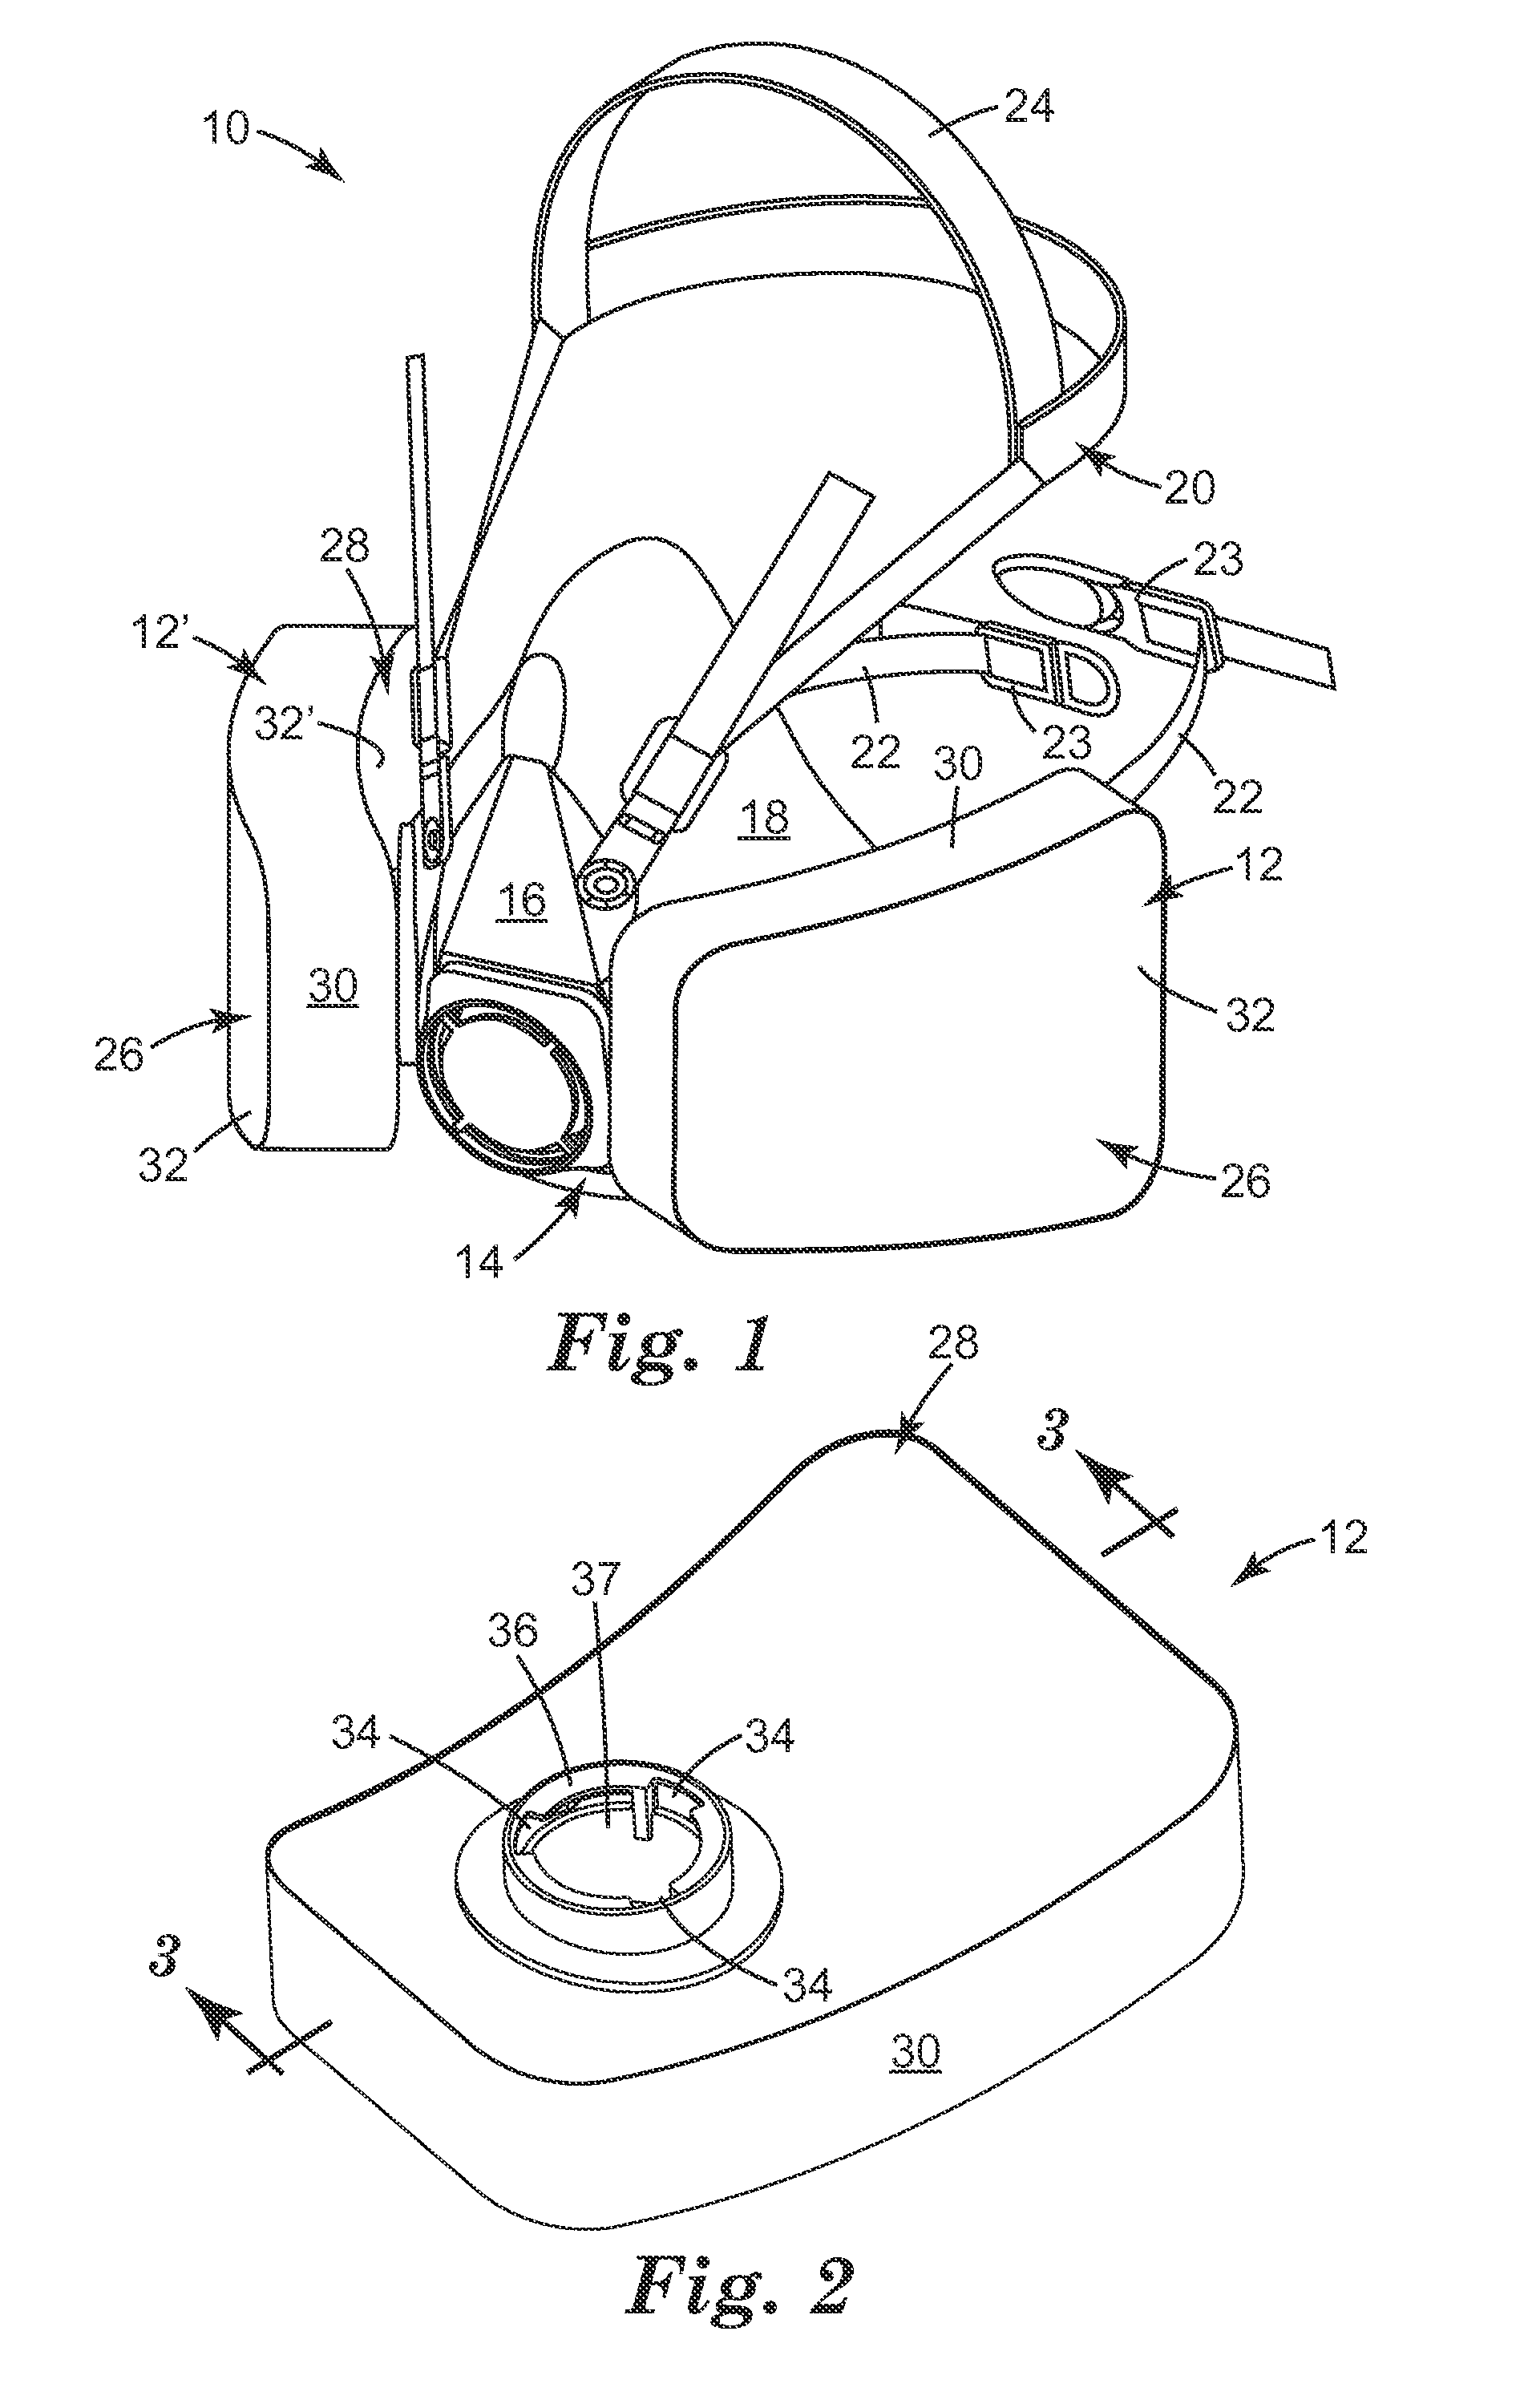 Method of making filter cartridge having roll-based housing sidewall